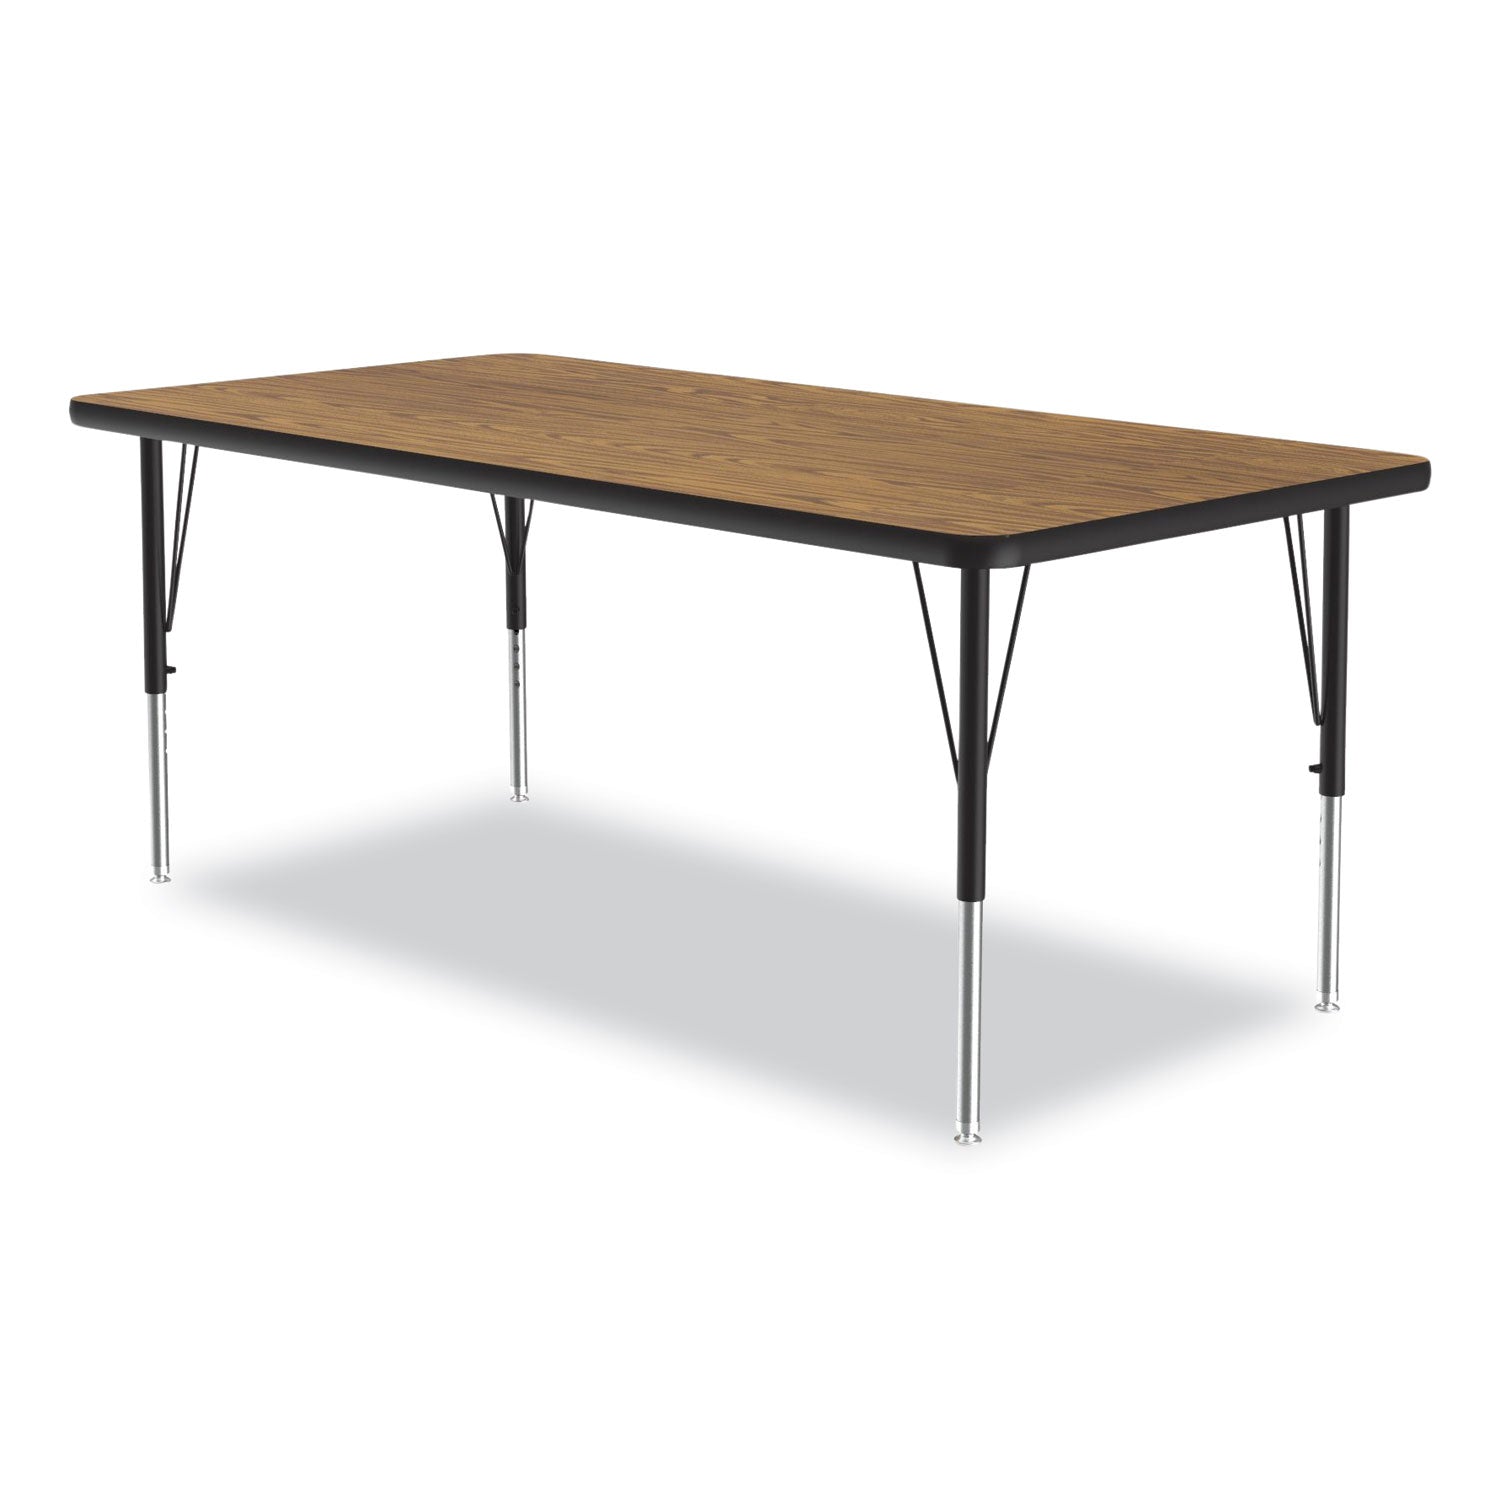 height-adjustable-activity-tables-rectangular-60w-x-30d-x-19h-medium-oak-4-pallet-ships-in-4-6-business-days_crl3060tf0695k4 - 1